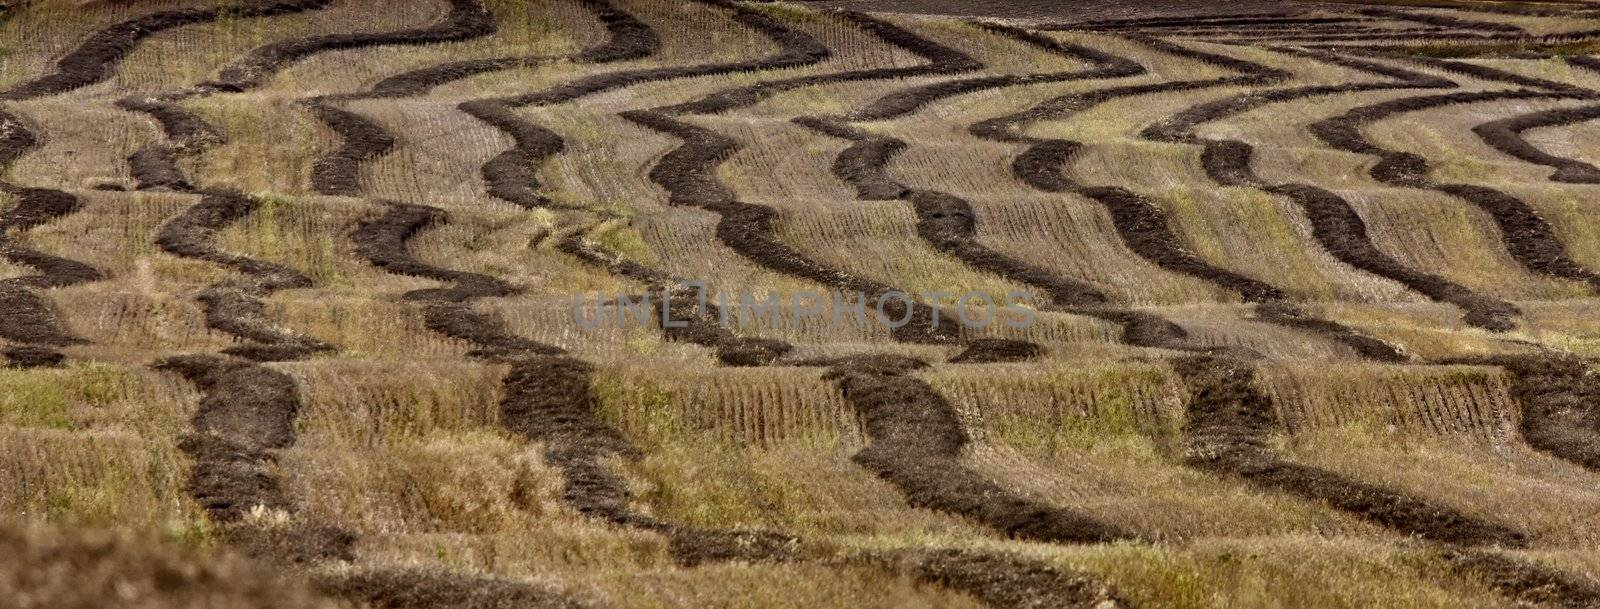 Wheat Field swathe Saskatchewan Canada Harvest time